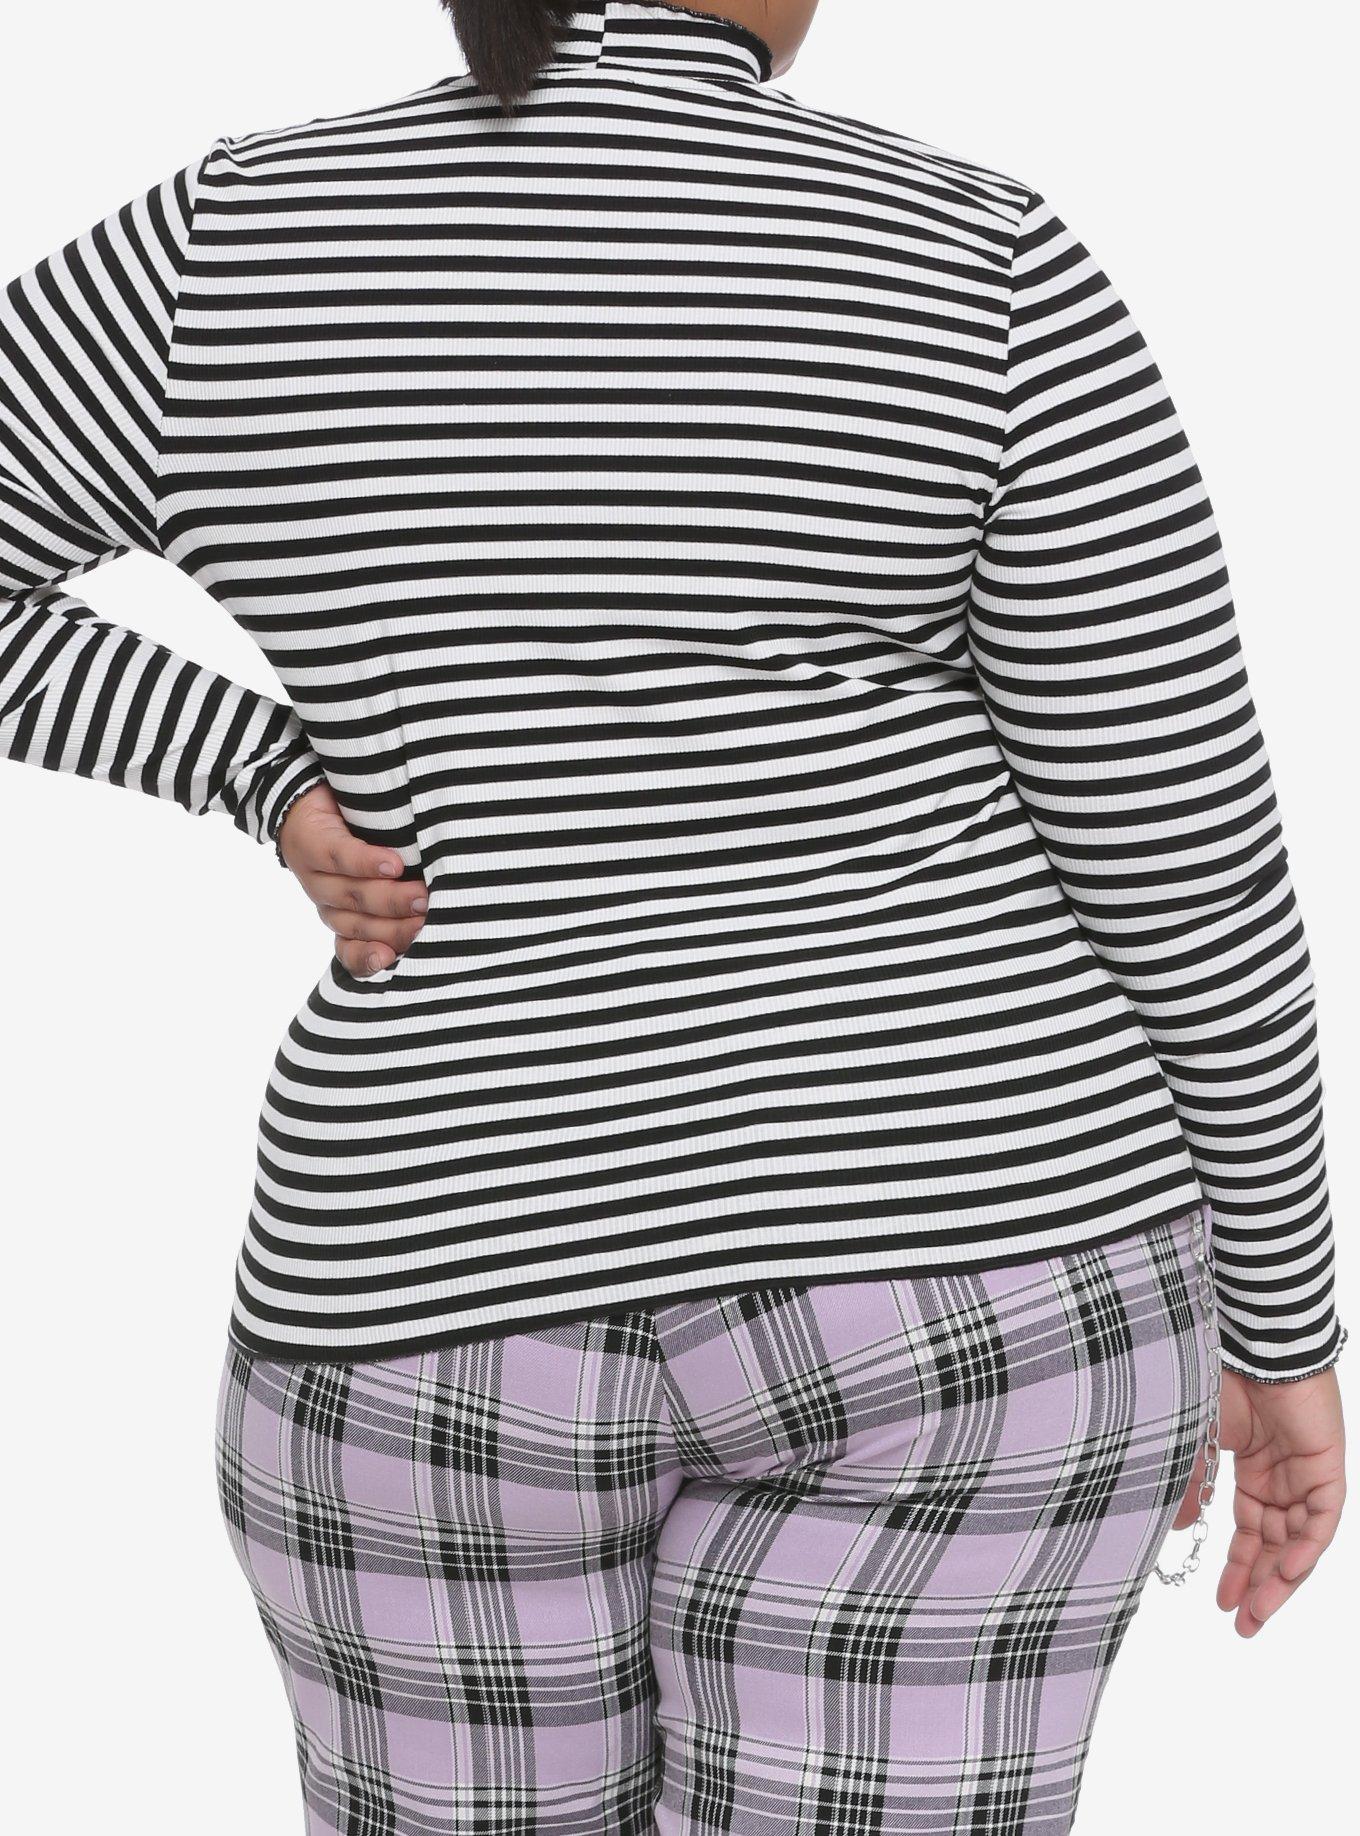 Black & White Stripe Mock Neck Girls Long-Sleeve Top Plus Size, BLACK  WHITE, alternate